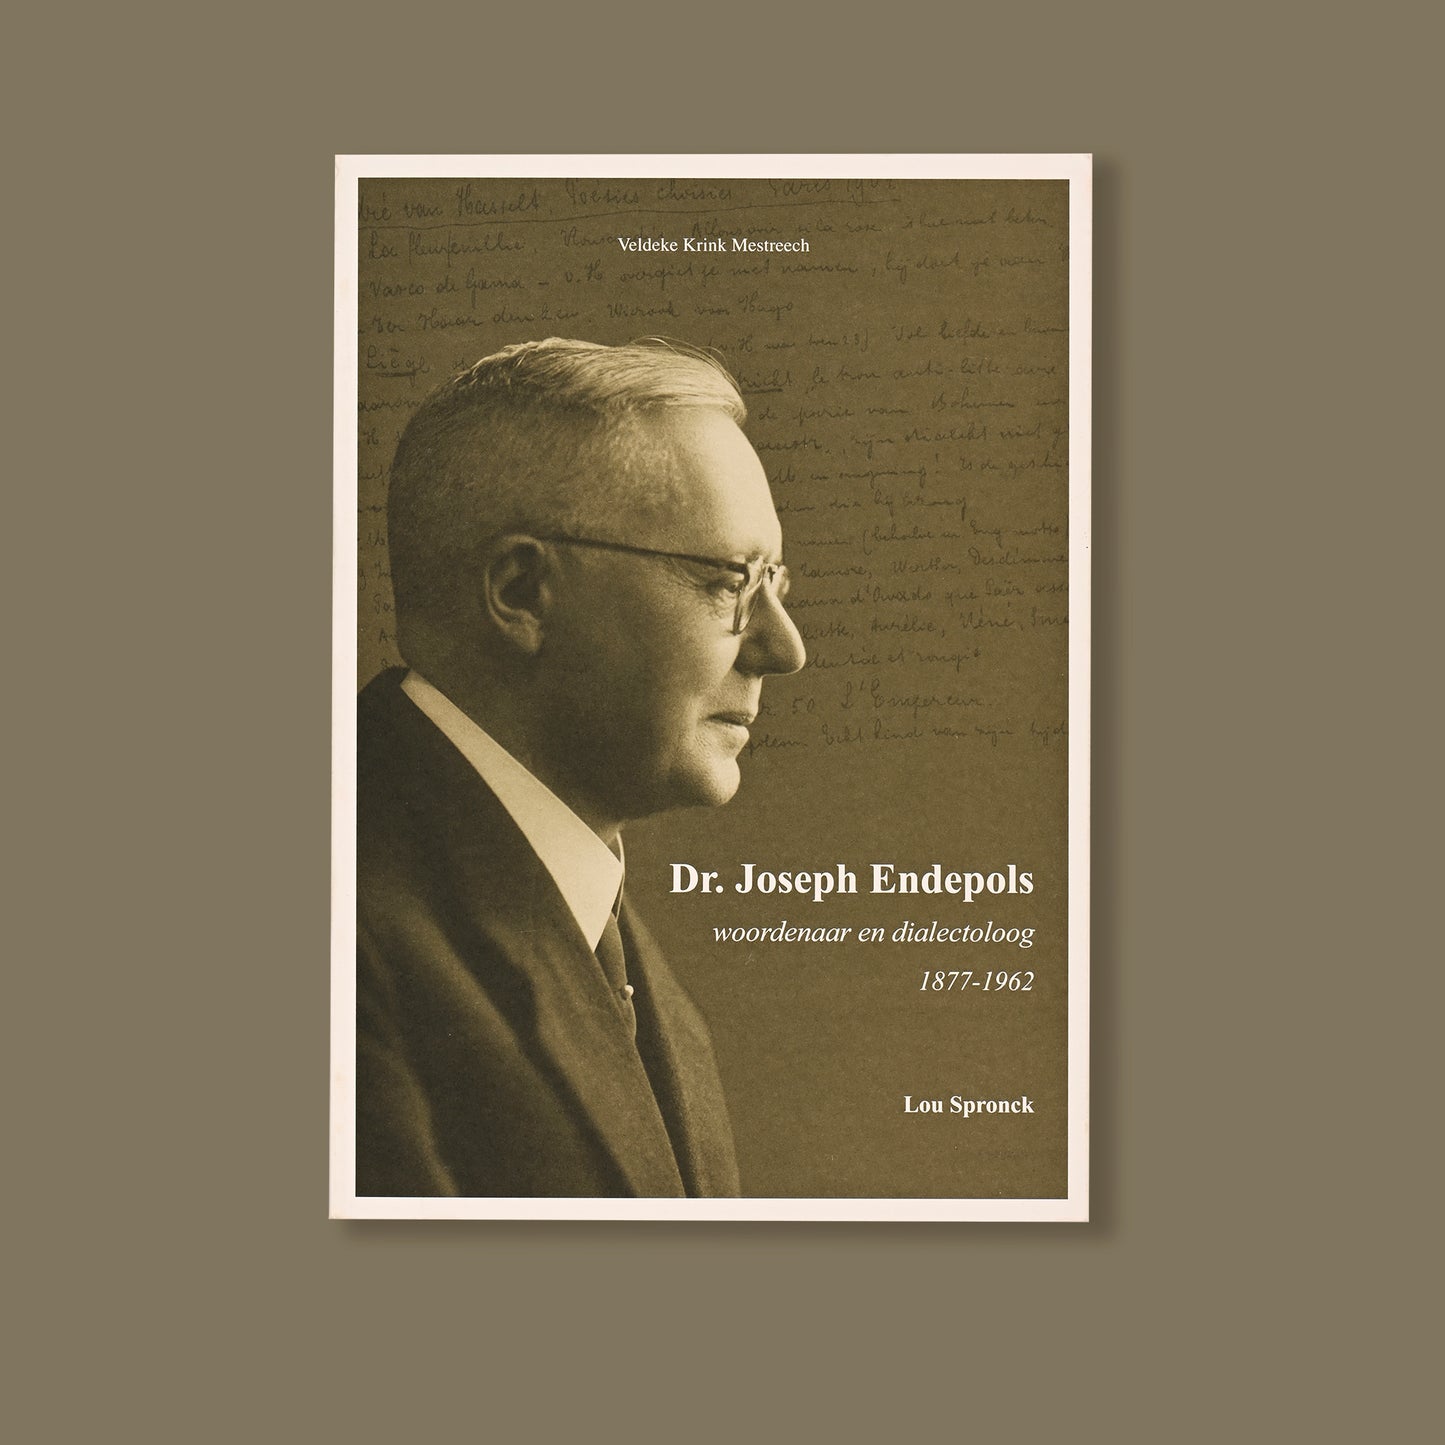 Dr. Joseph Endepols, woordenaar en dialectoloog